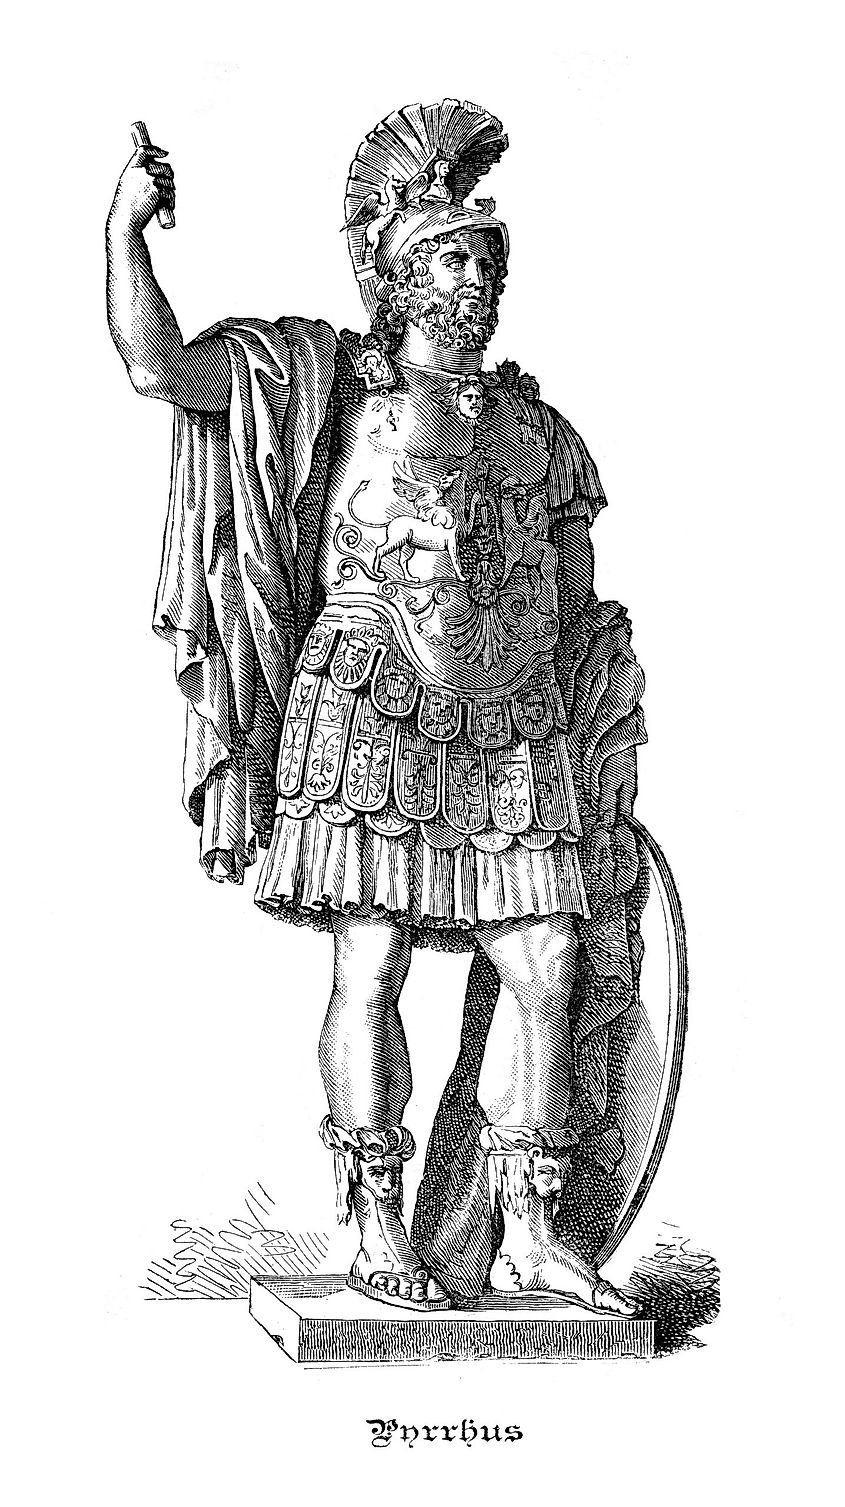 Pyrrhus was a Greek king and statesman of the Hellenistic period. Credit: Grafissimo https://www.istockphoto.com/portfolio/Grafissimo?mediatype=illustration